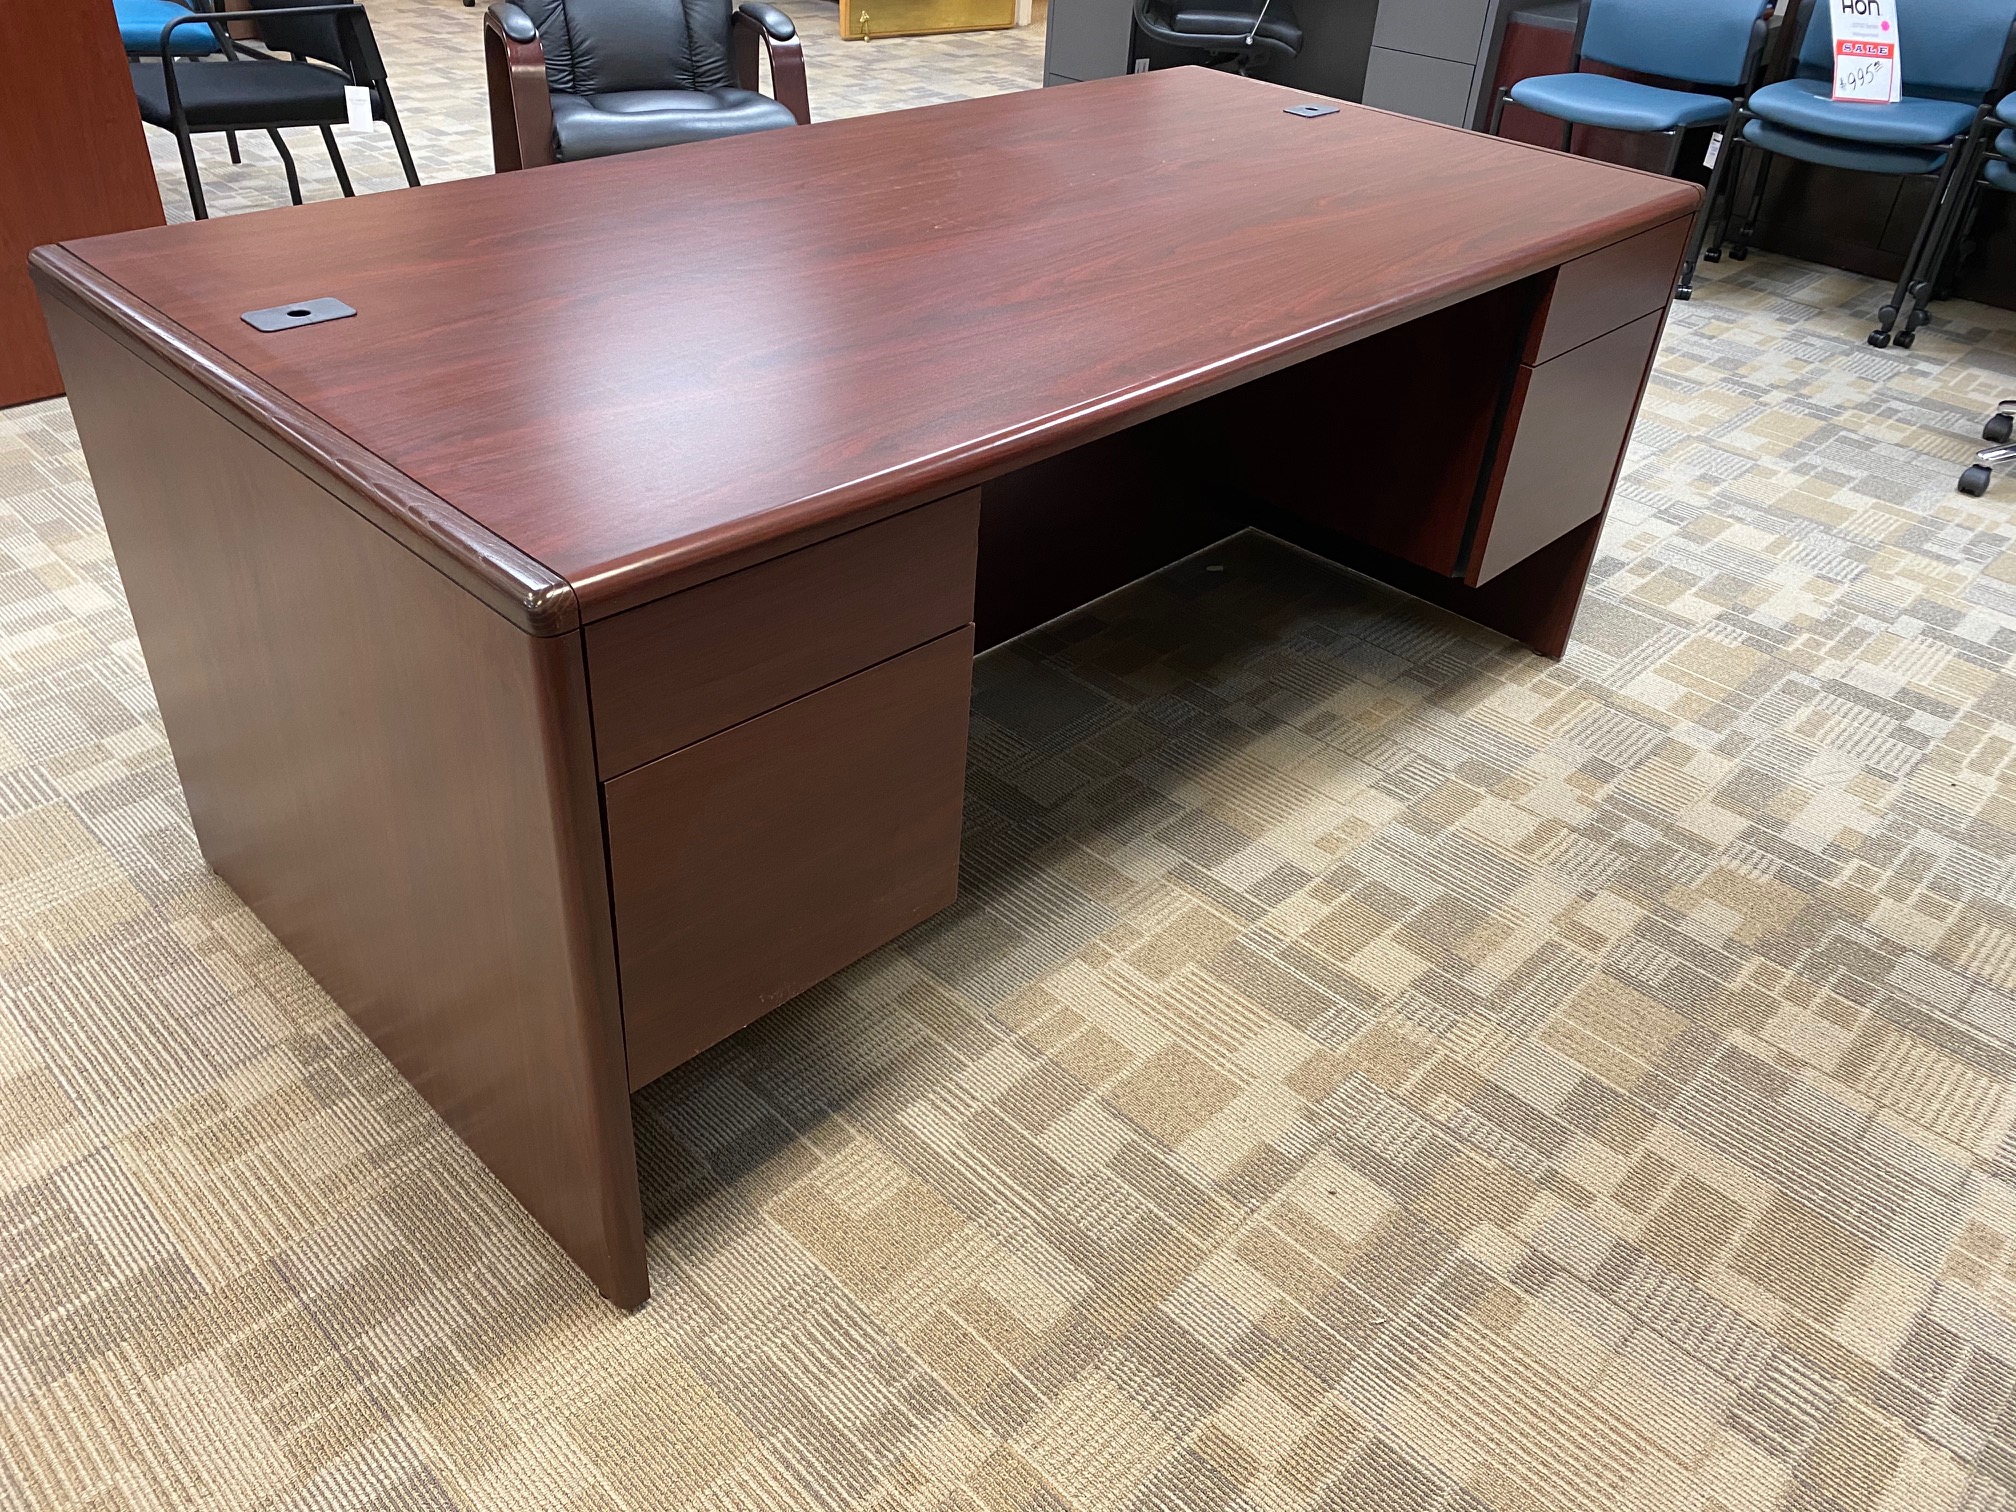 hon-executive-office-desk-and-credenza-hutch-set-400-good-condition